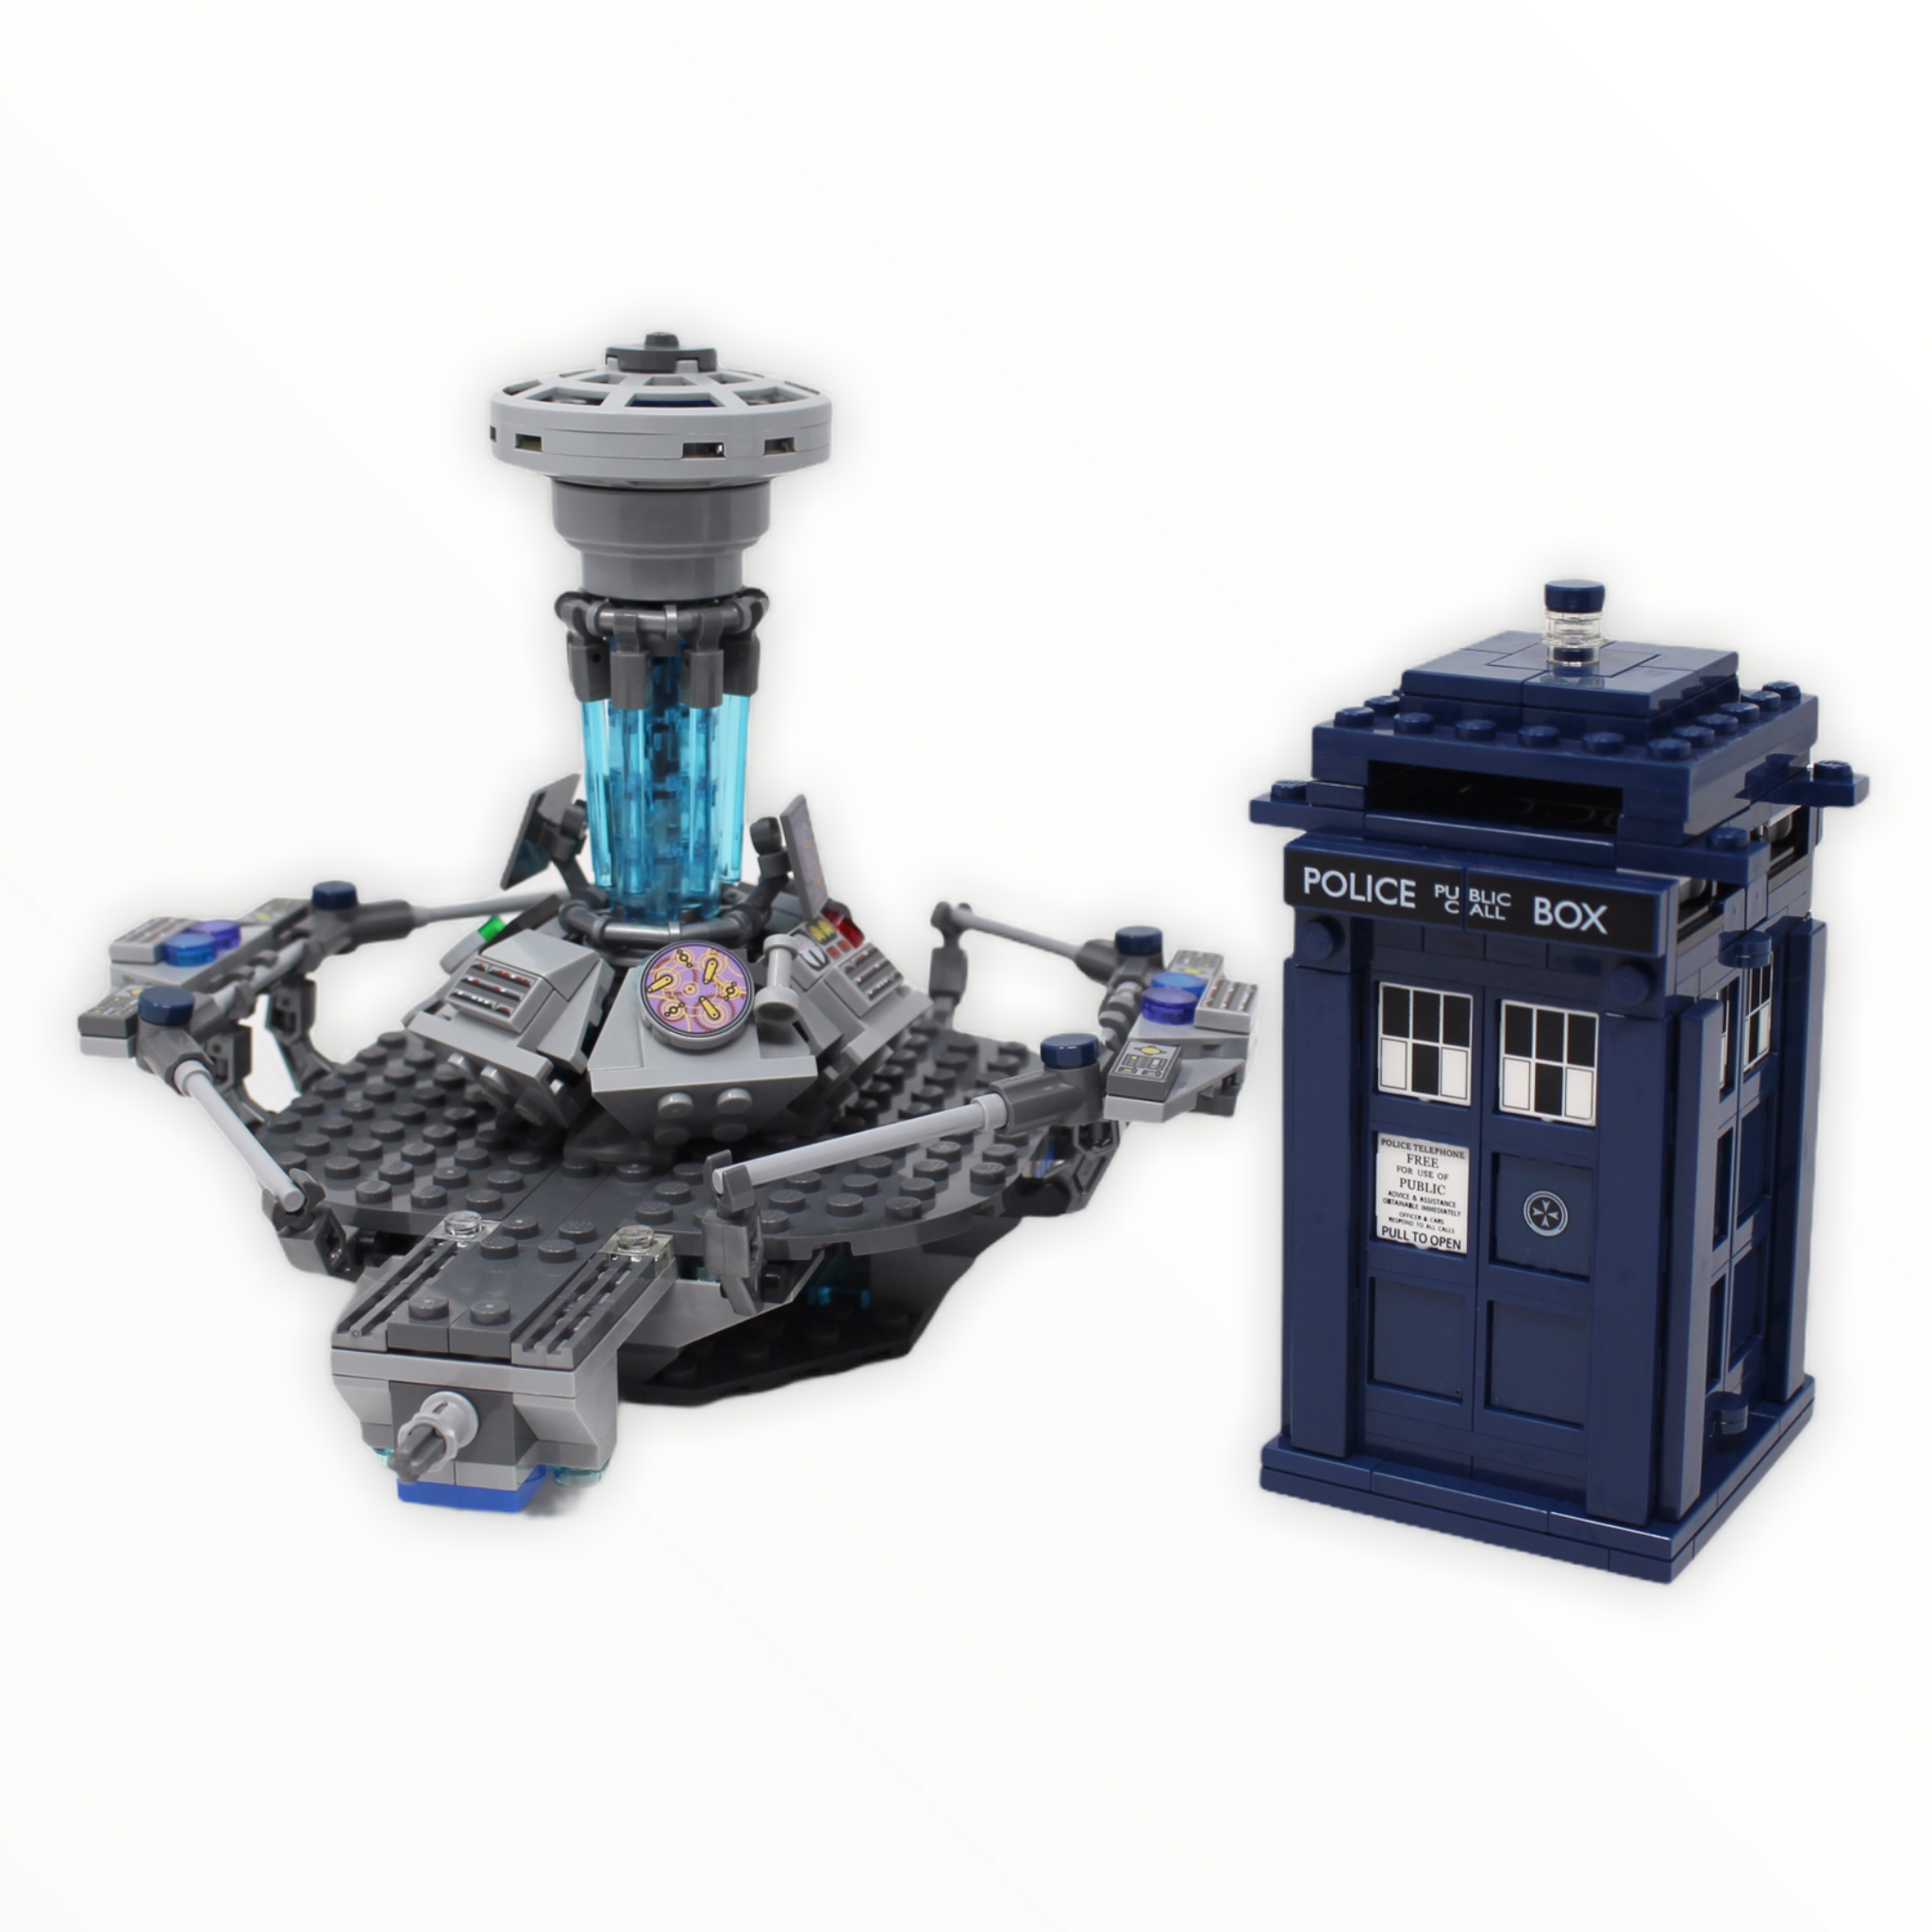 LEGO Ideas Doctor Who Set 21304 - US